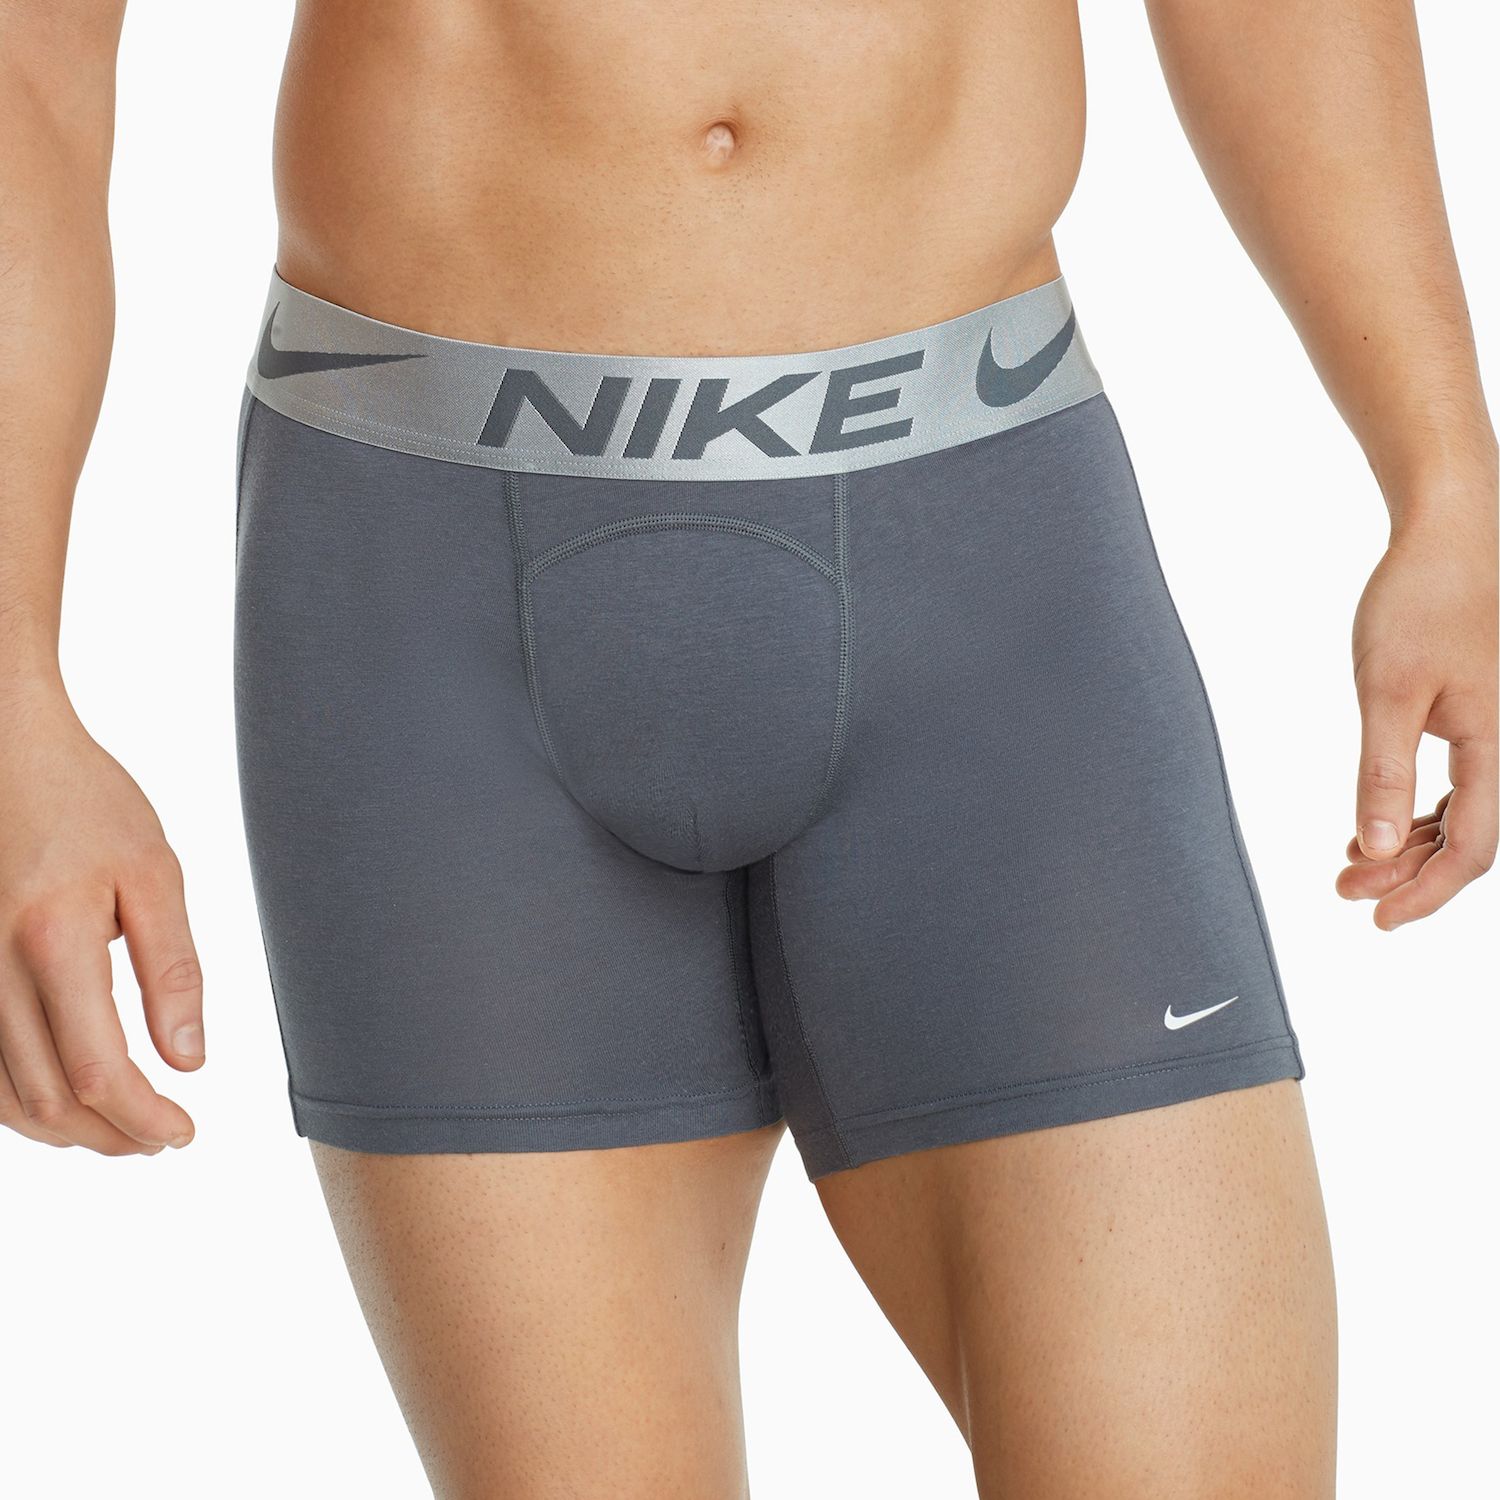 nike 9 inch underwear